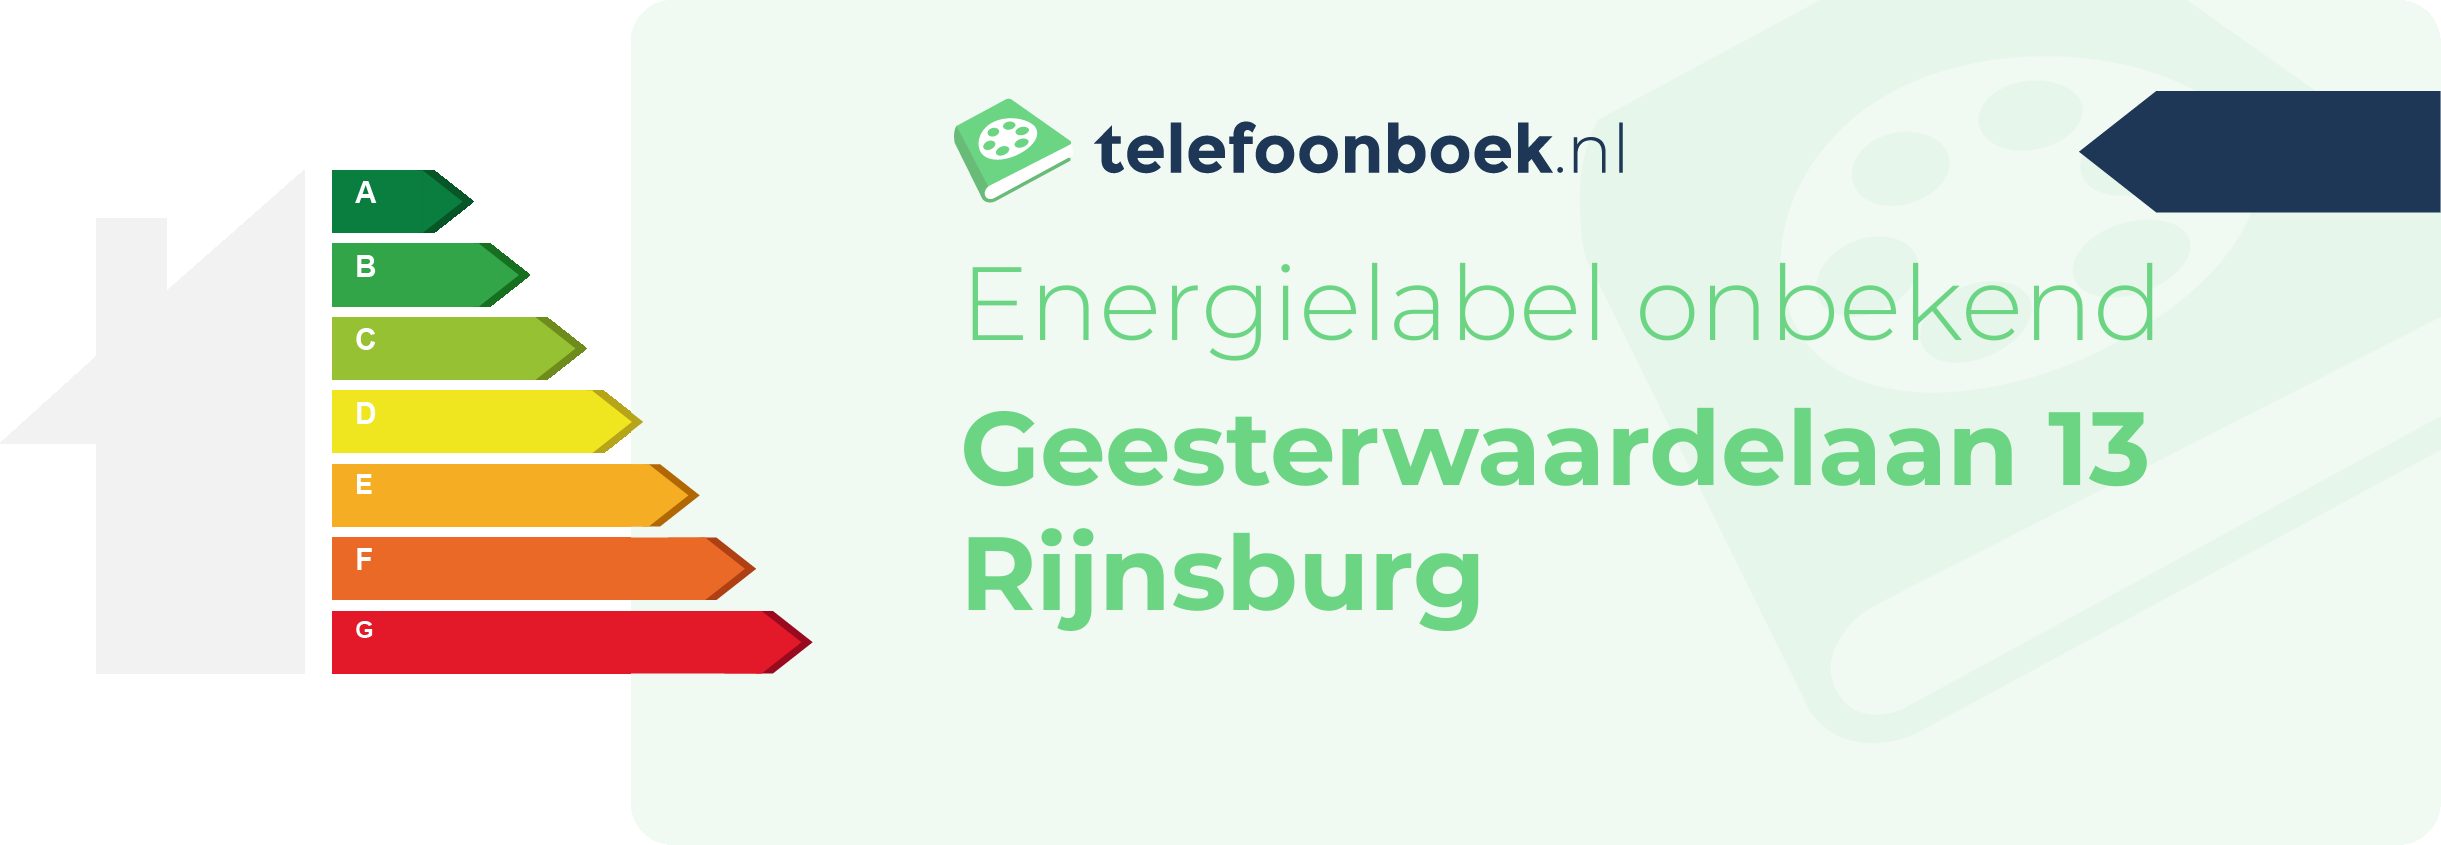 Energielabel Geesterwaardelaan 13 Rijnsburg